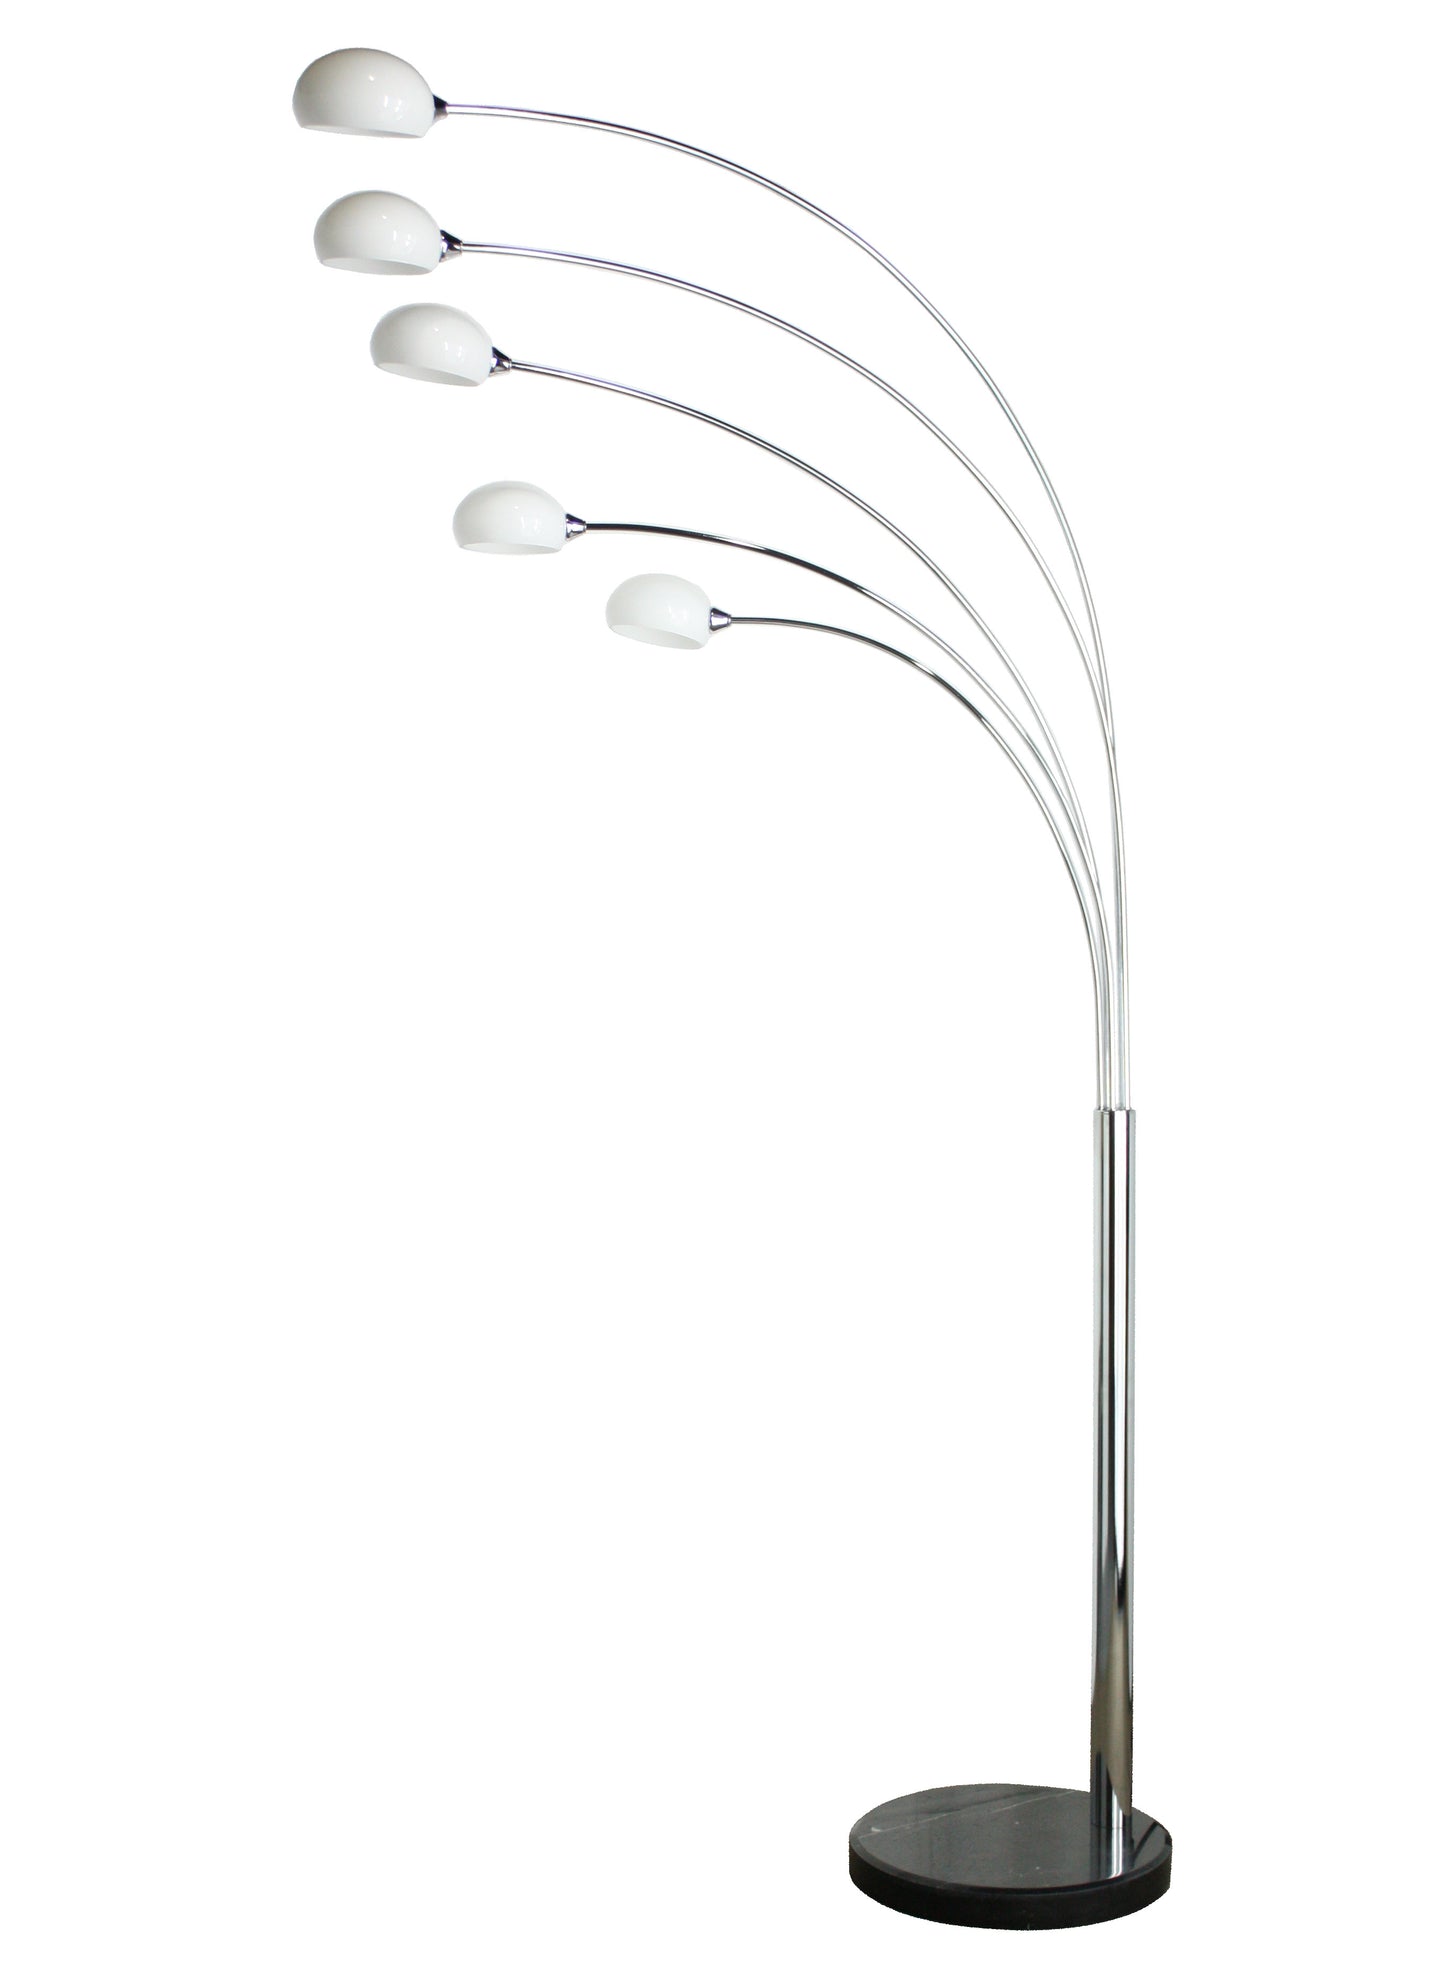 5 Arm Floor Lamp Chrome - White Shade